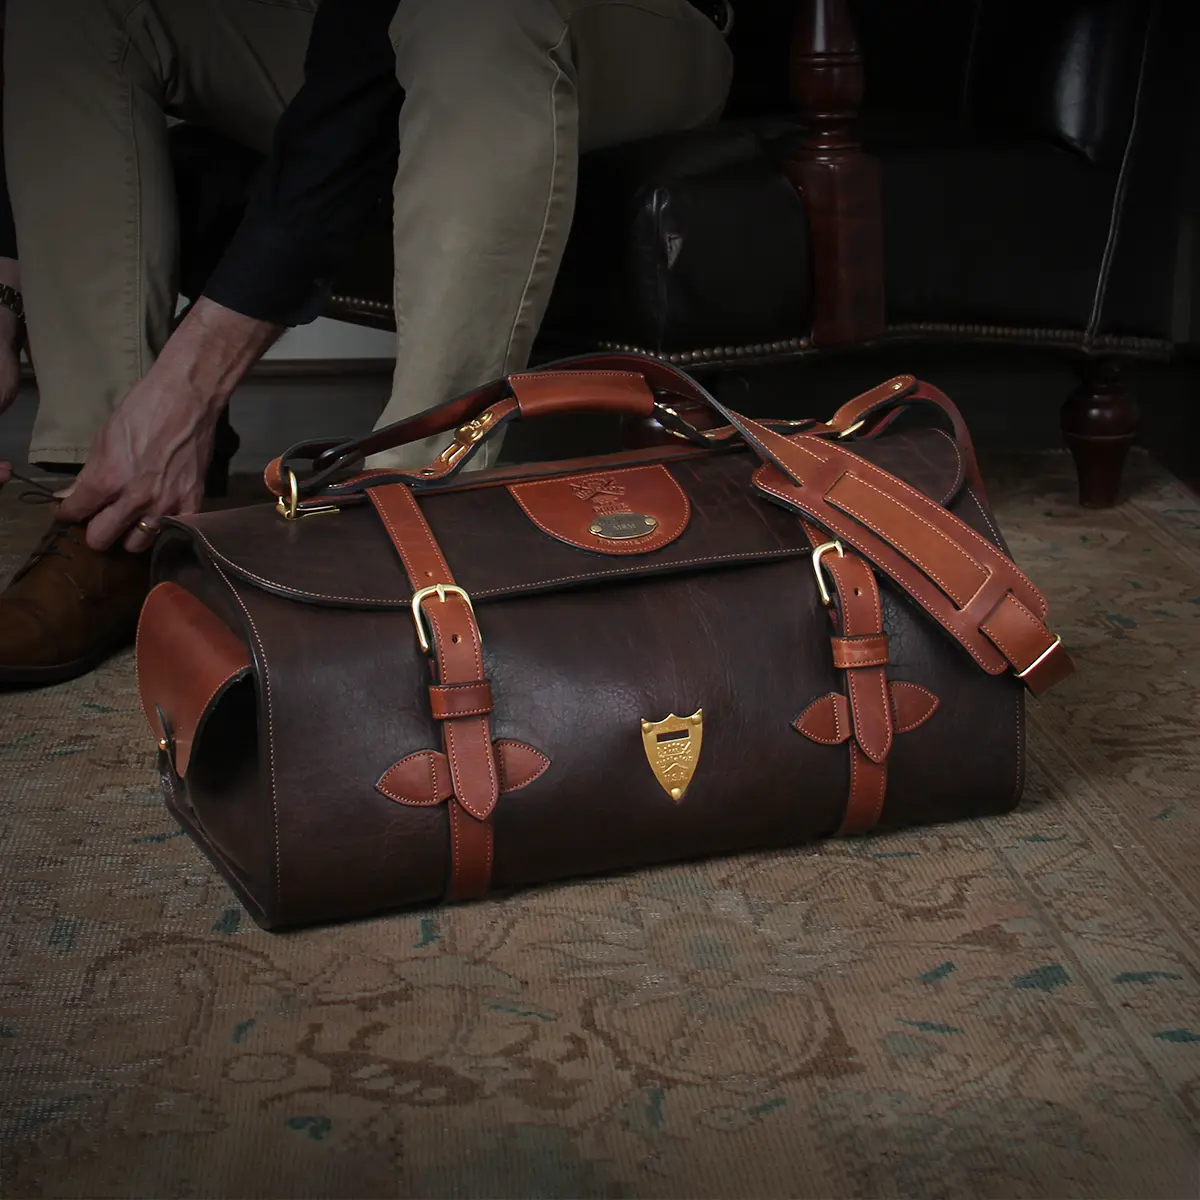 Buffalo Leather Duffle, No. 5 Grip Travel Bag - USA Made | Col. Littleton